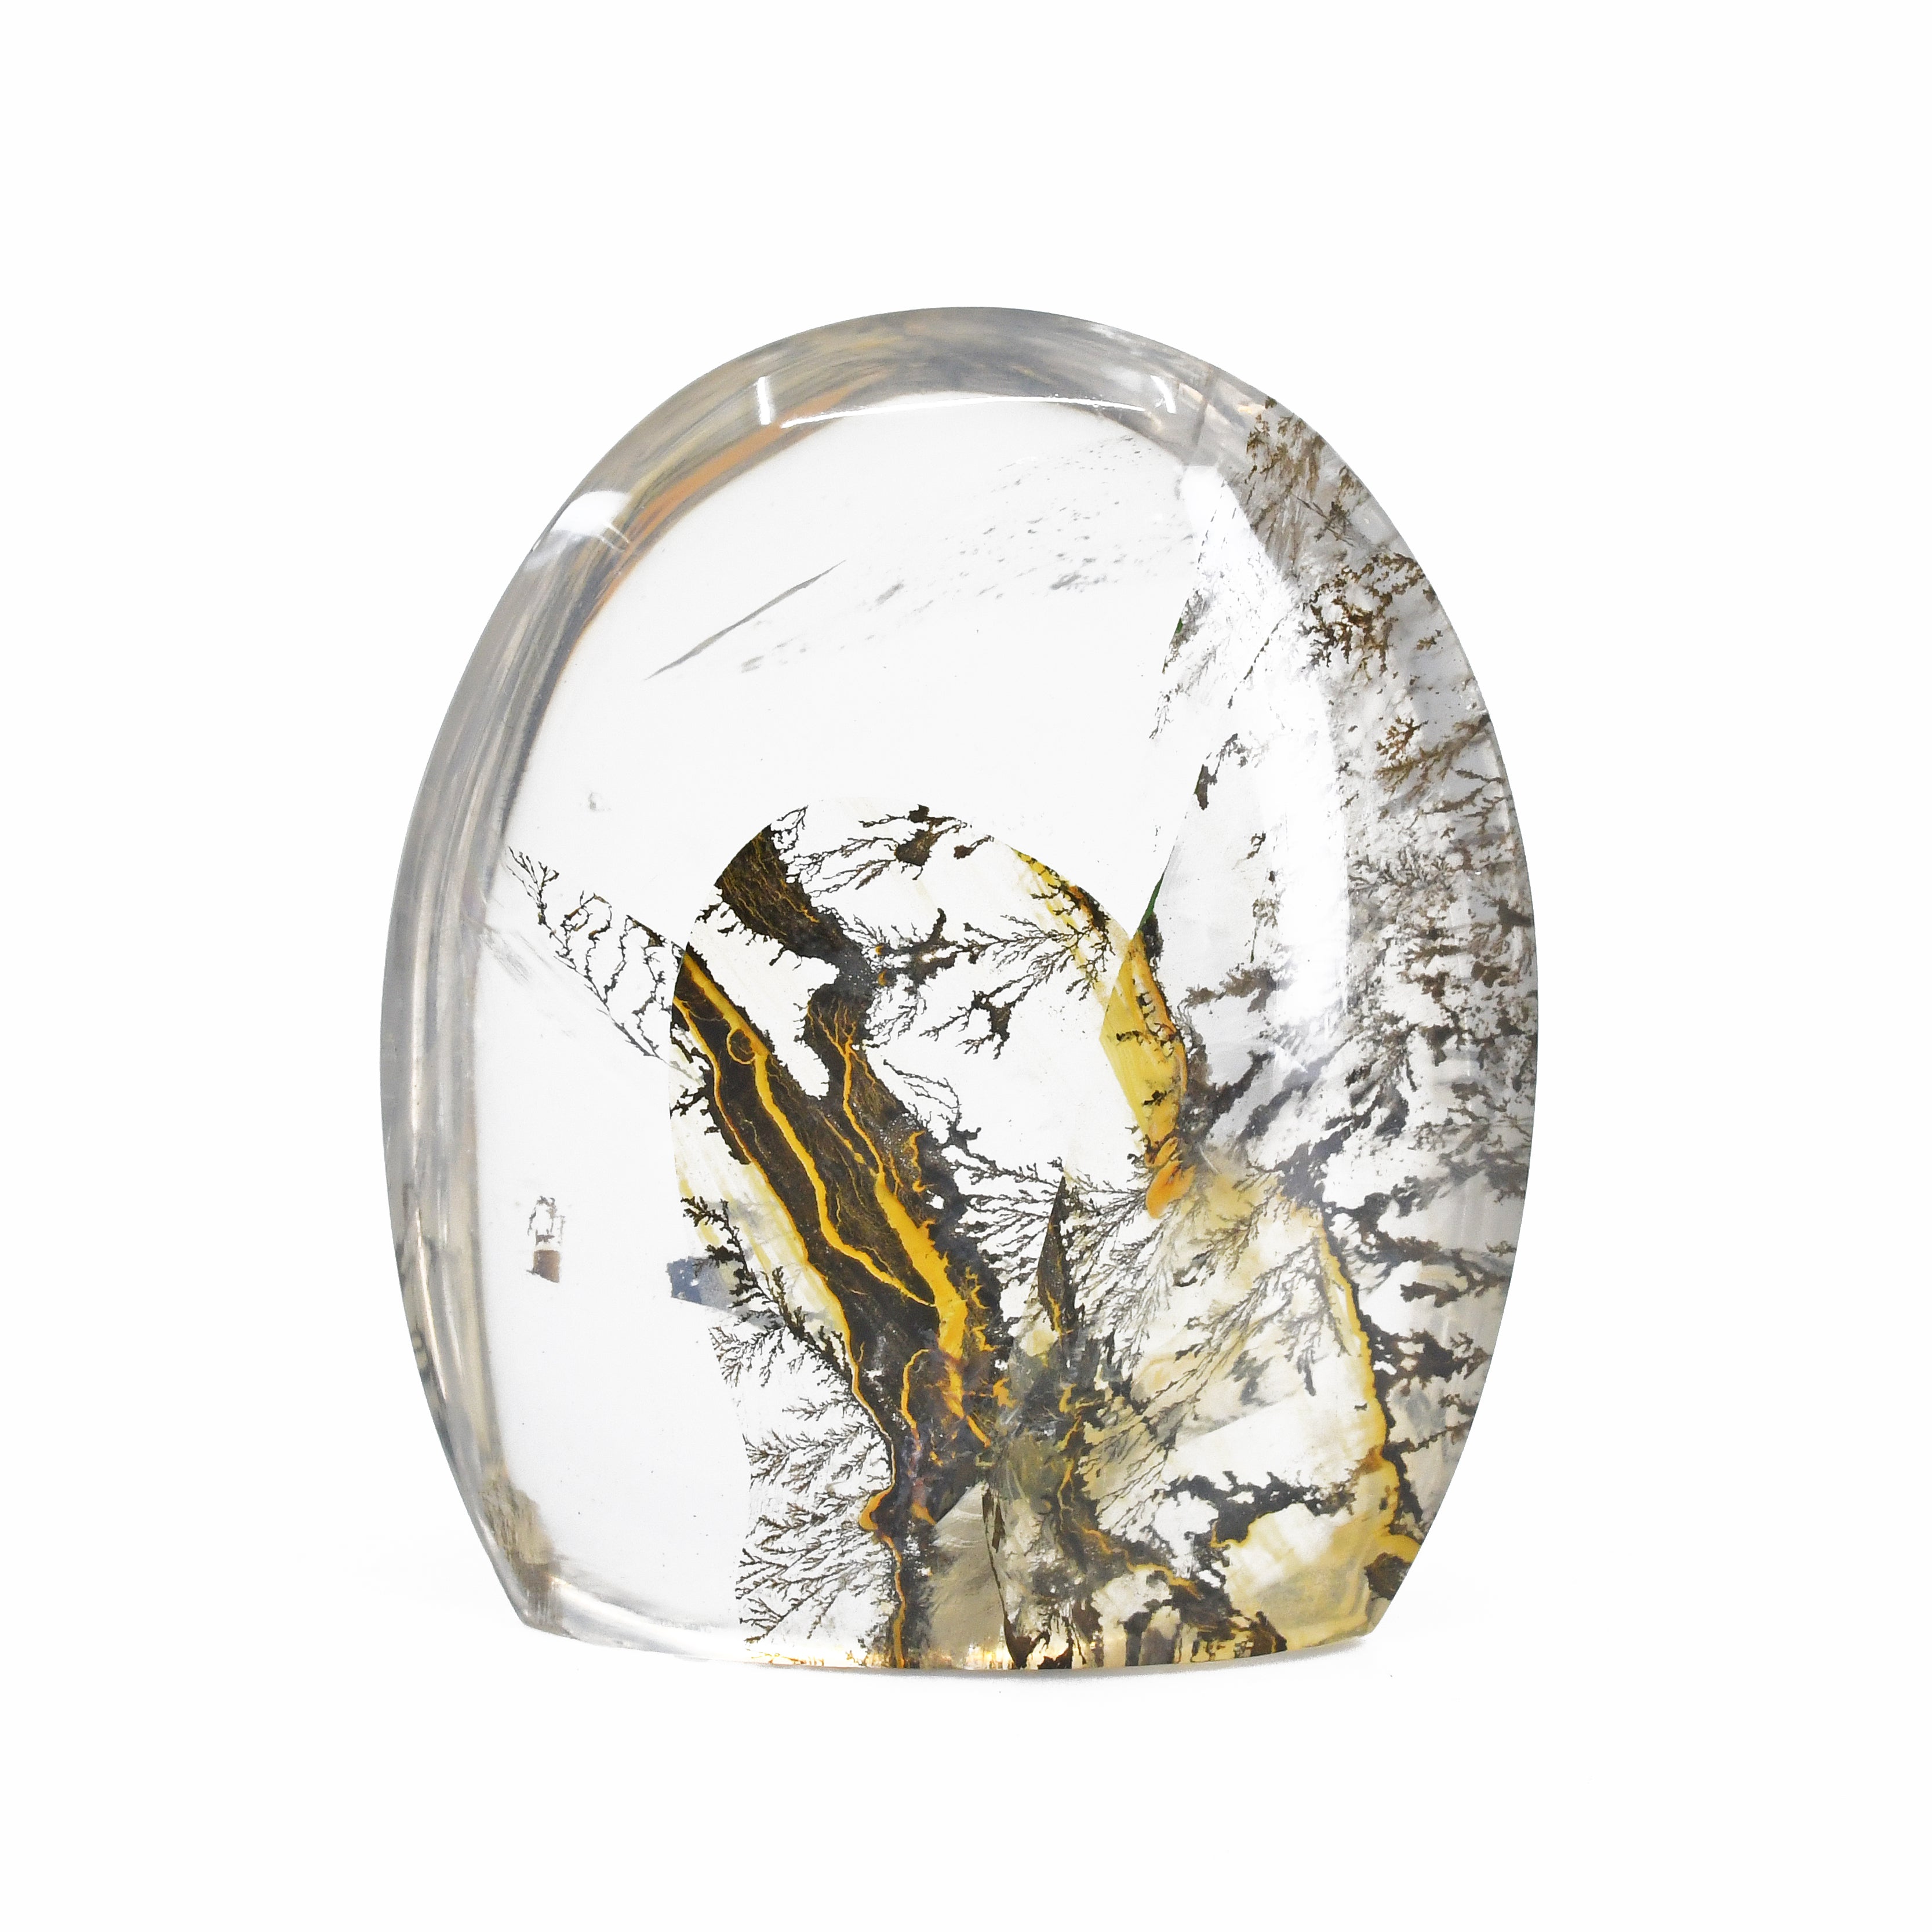 Dendritic Quartz with Iron 2.14 inch 82 grams Polished Crystal - MSCON-044 - Crystalarium